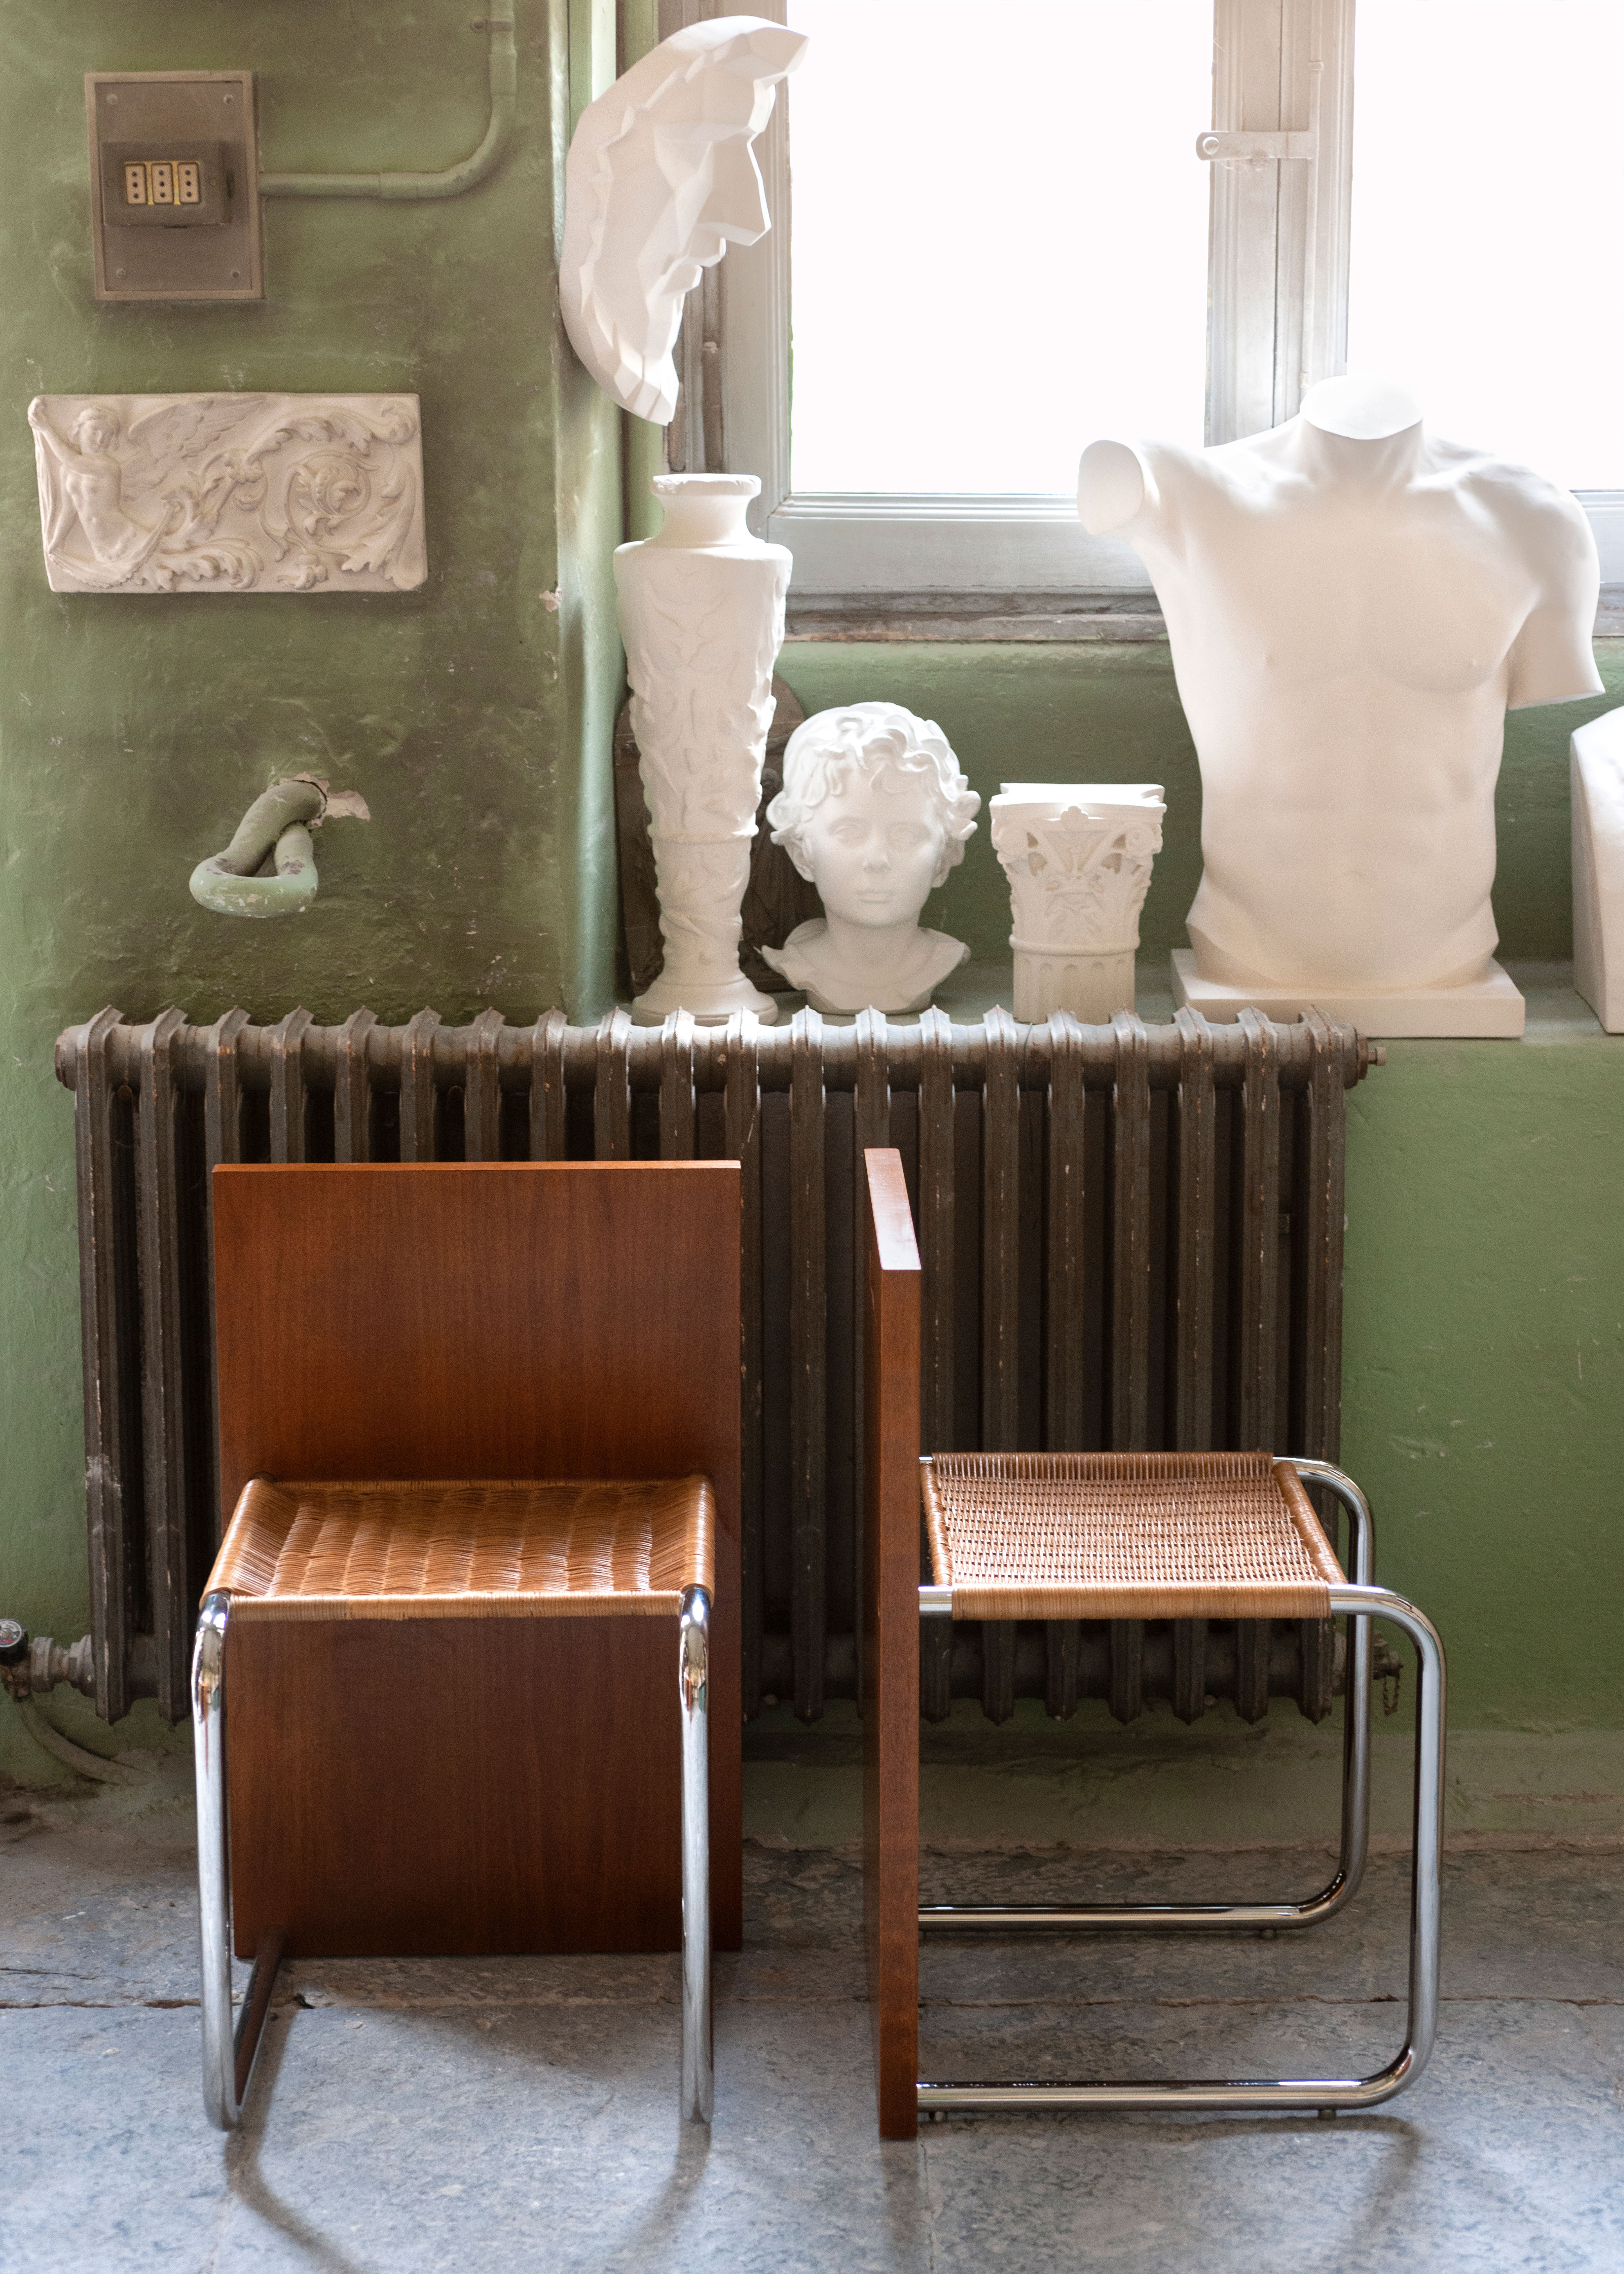 Interni Venosta, new brand by Dimorestudio founders, with furniture presented in Milanese Gypsothek